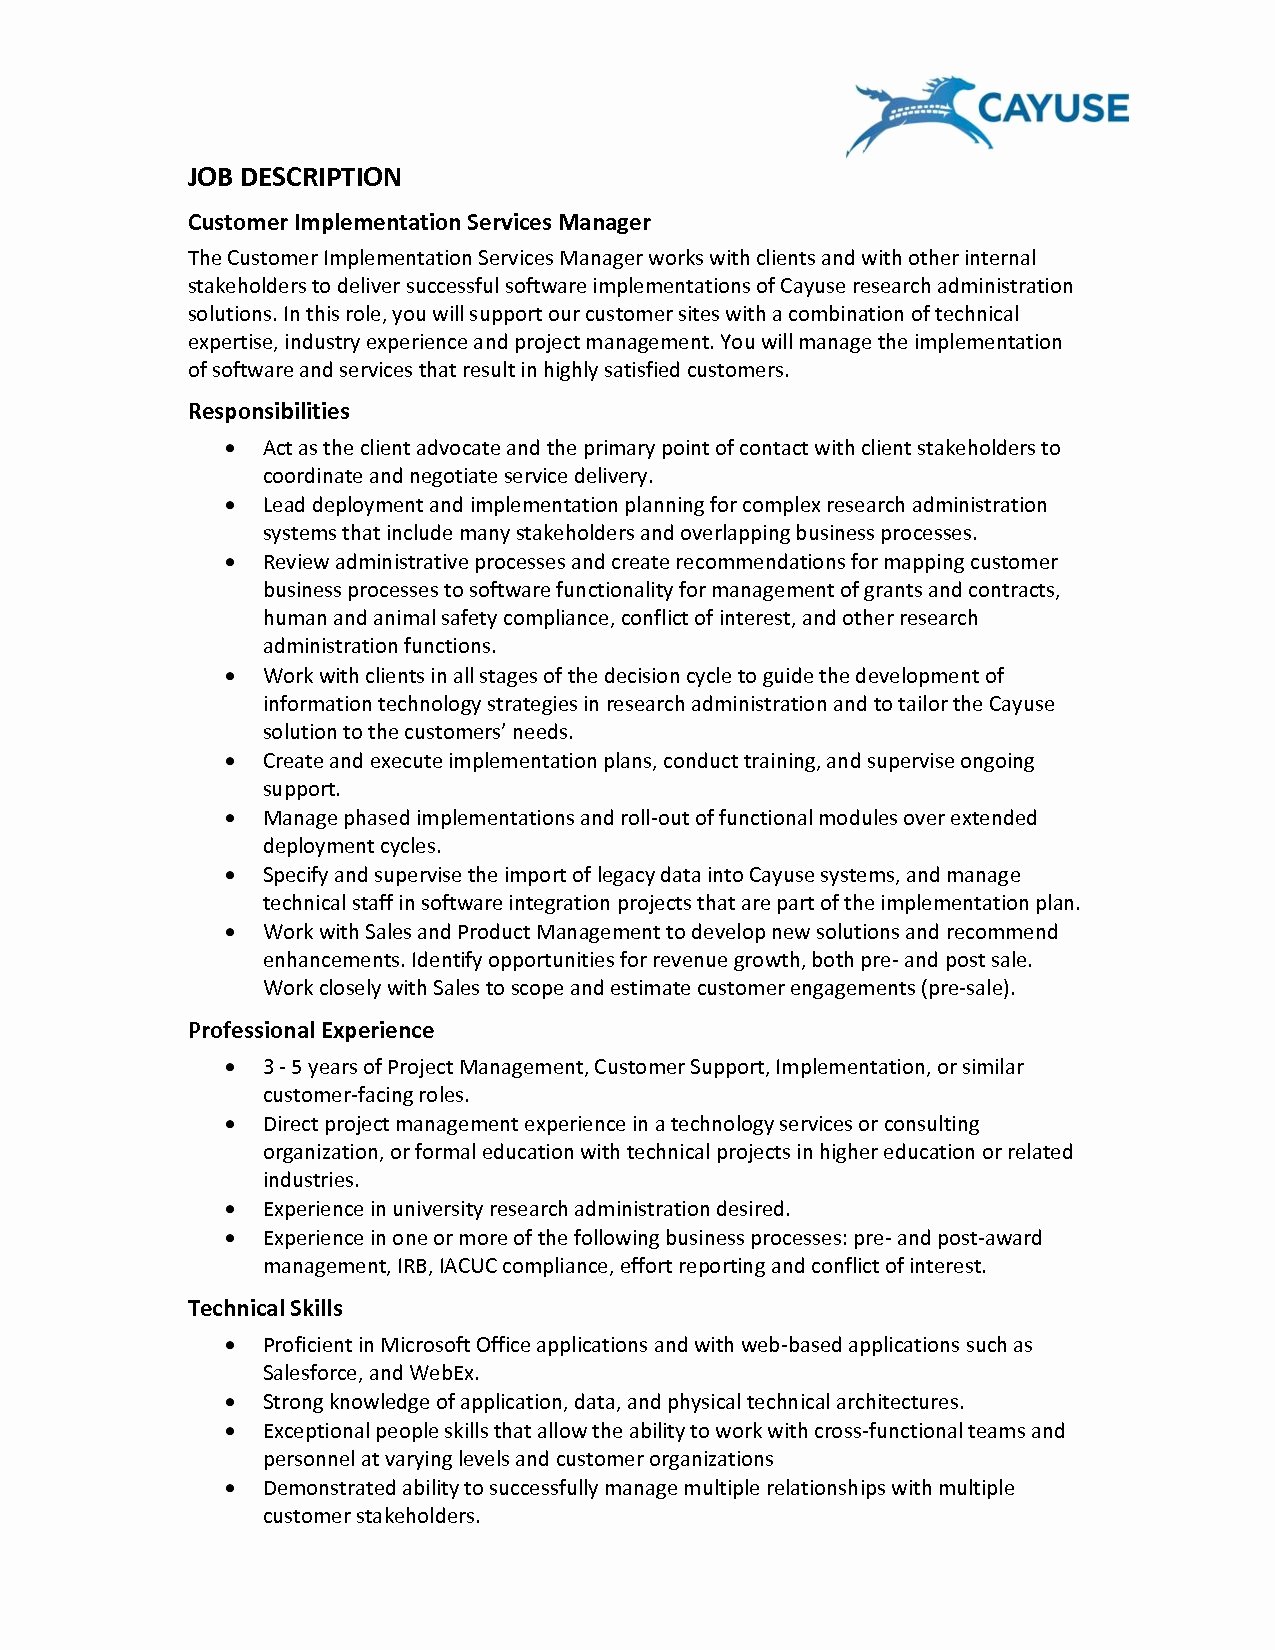 Call Center Customer Service Job Description Resume